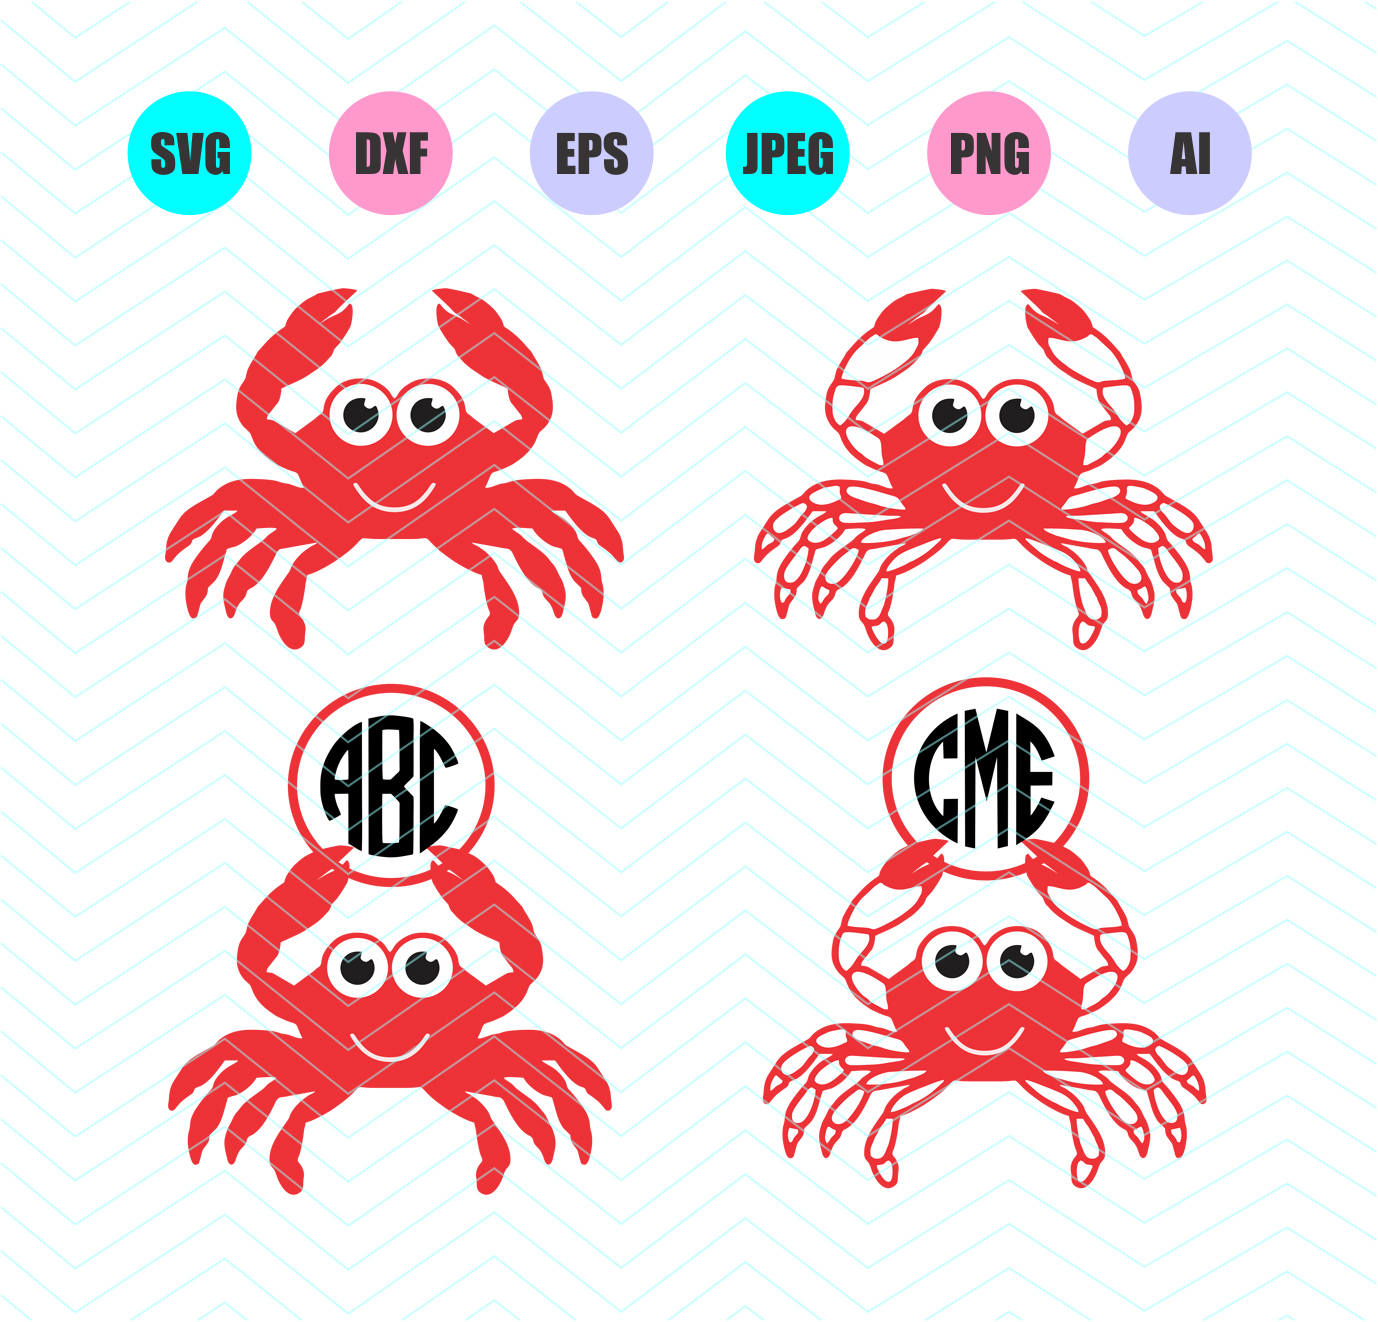 Download Crab monogram Svg Dxf Eps Png Jpg Ai Cut Vector File ...